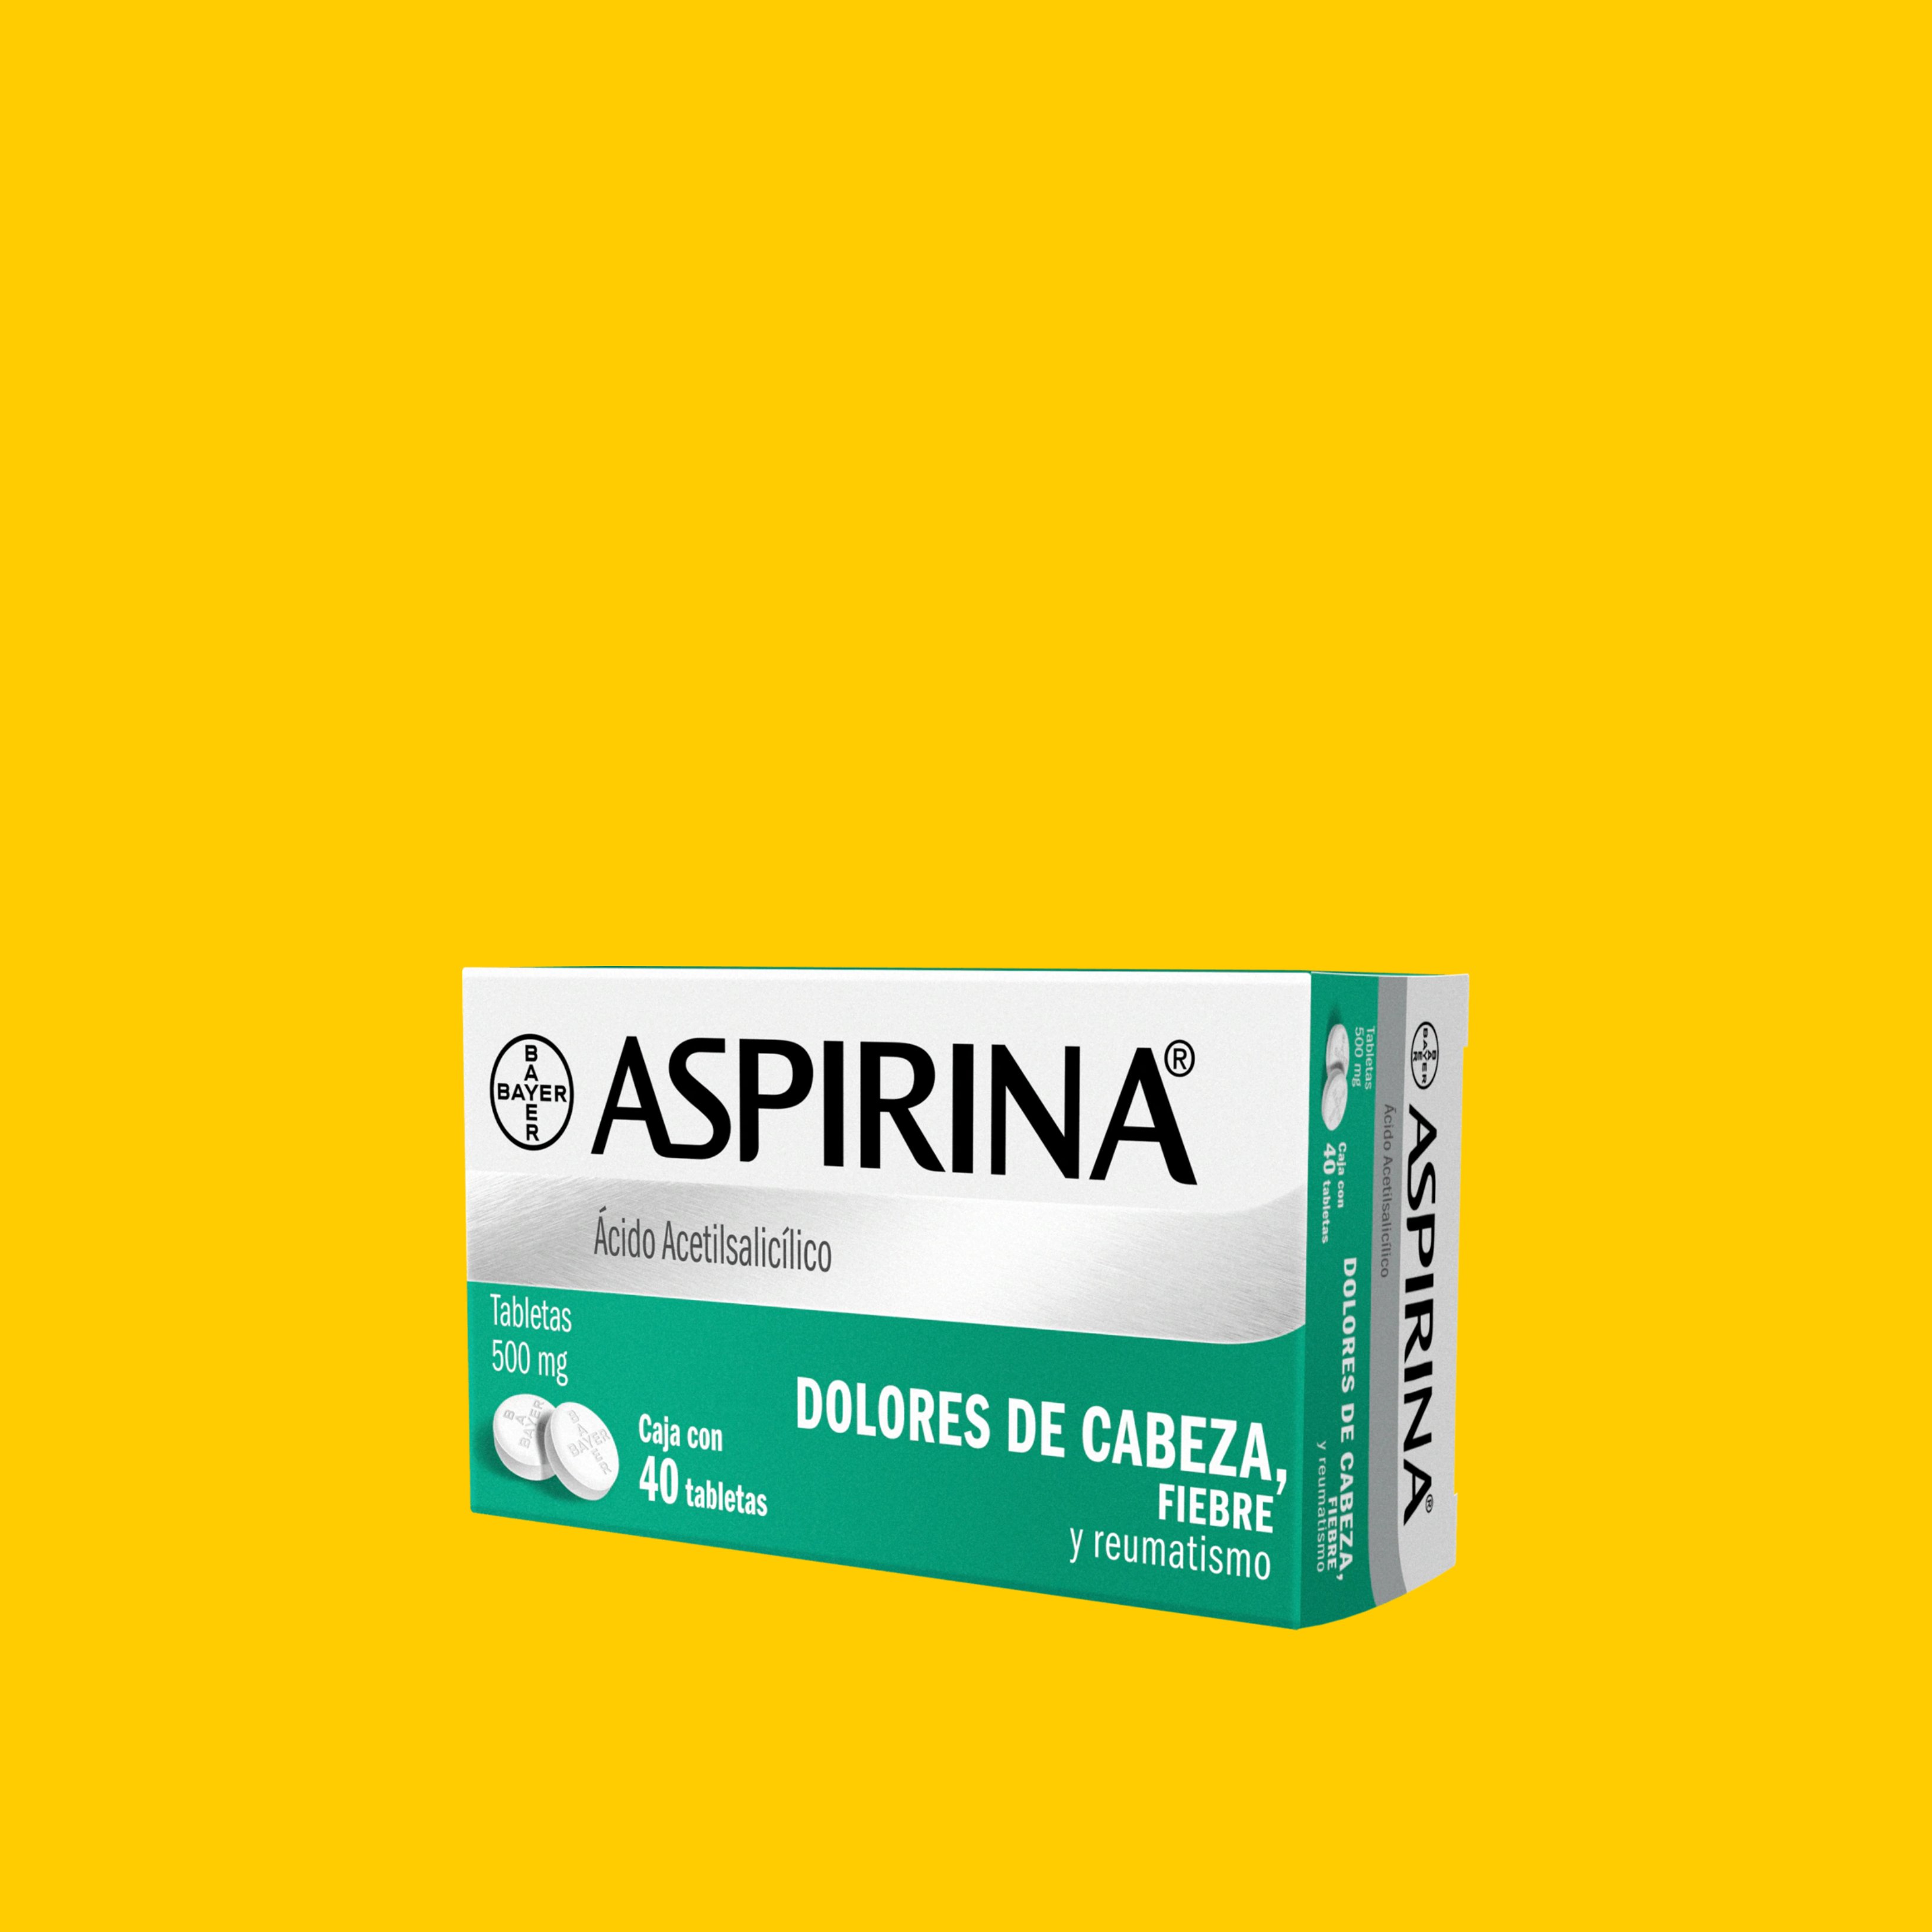 El riesgo del uso de la aspirina